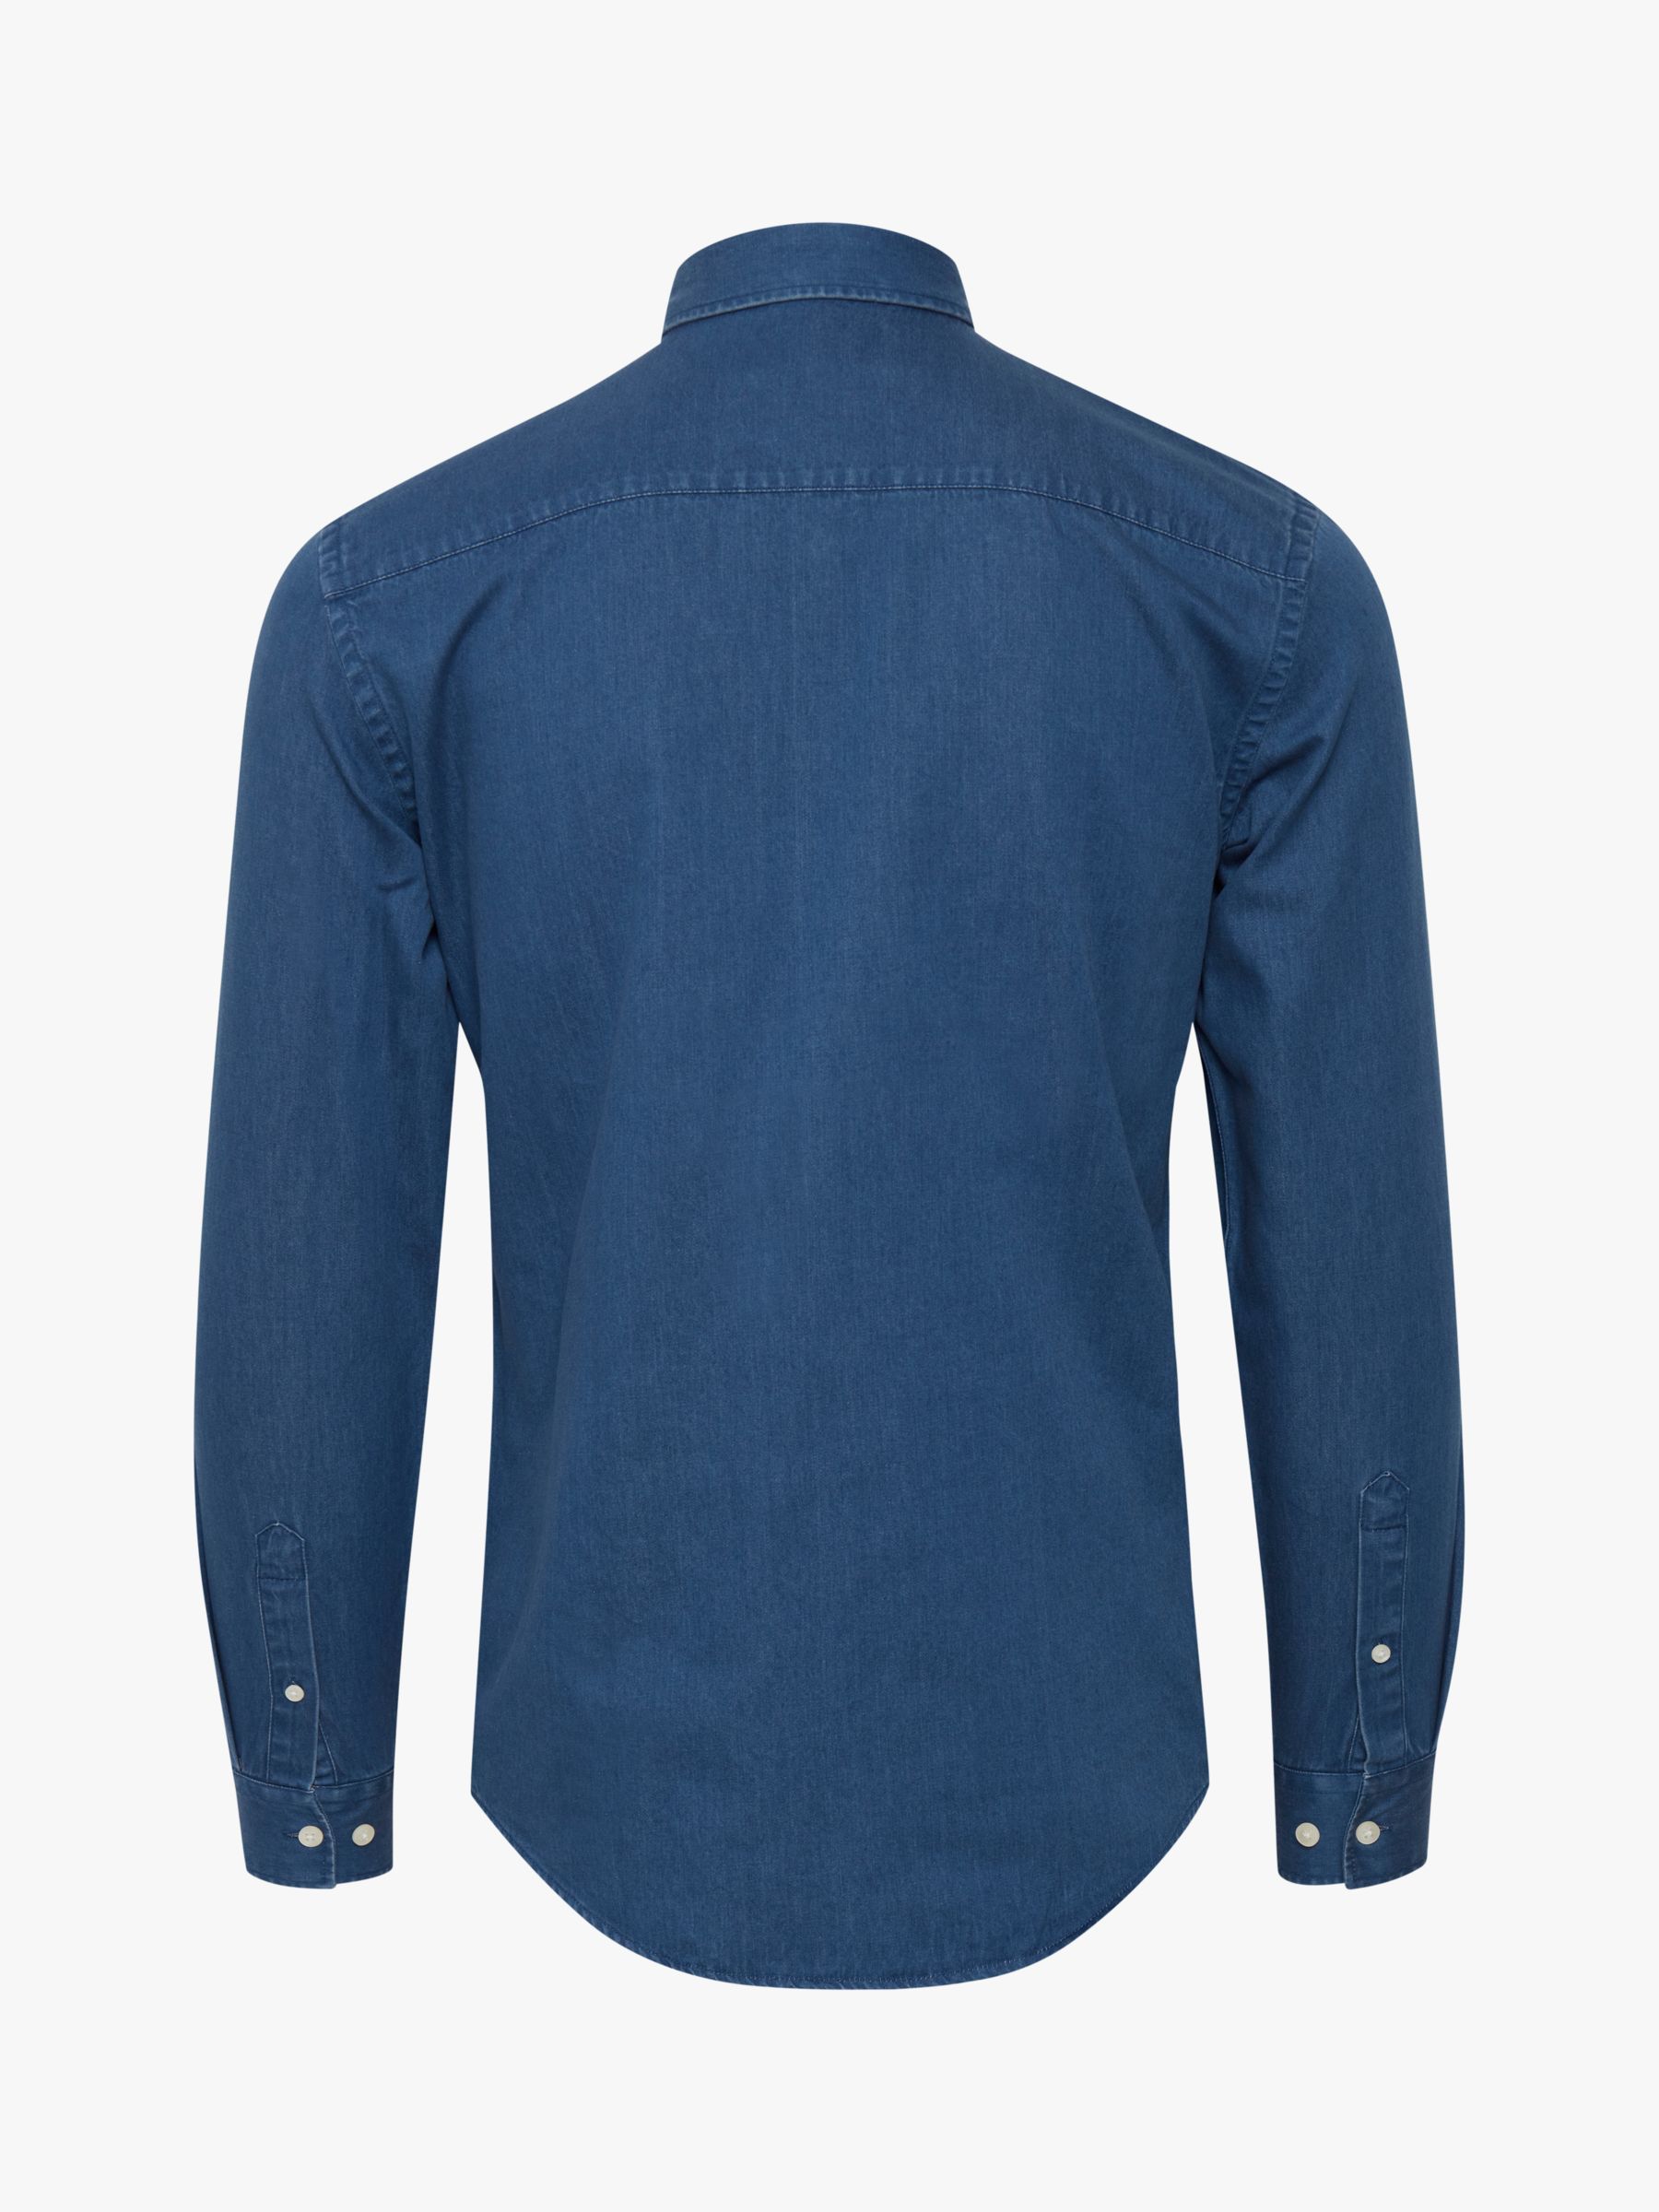 Casual Friday Anton Long Sleeve Denim Shirt, Blue, S